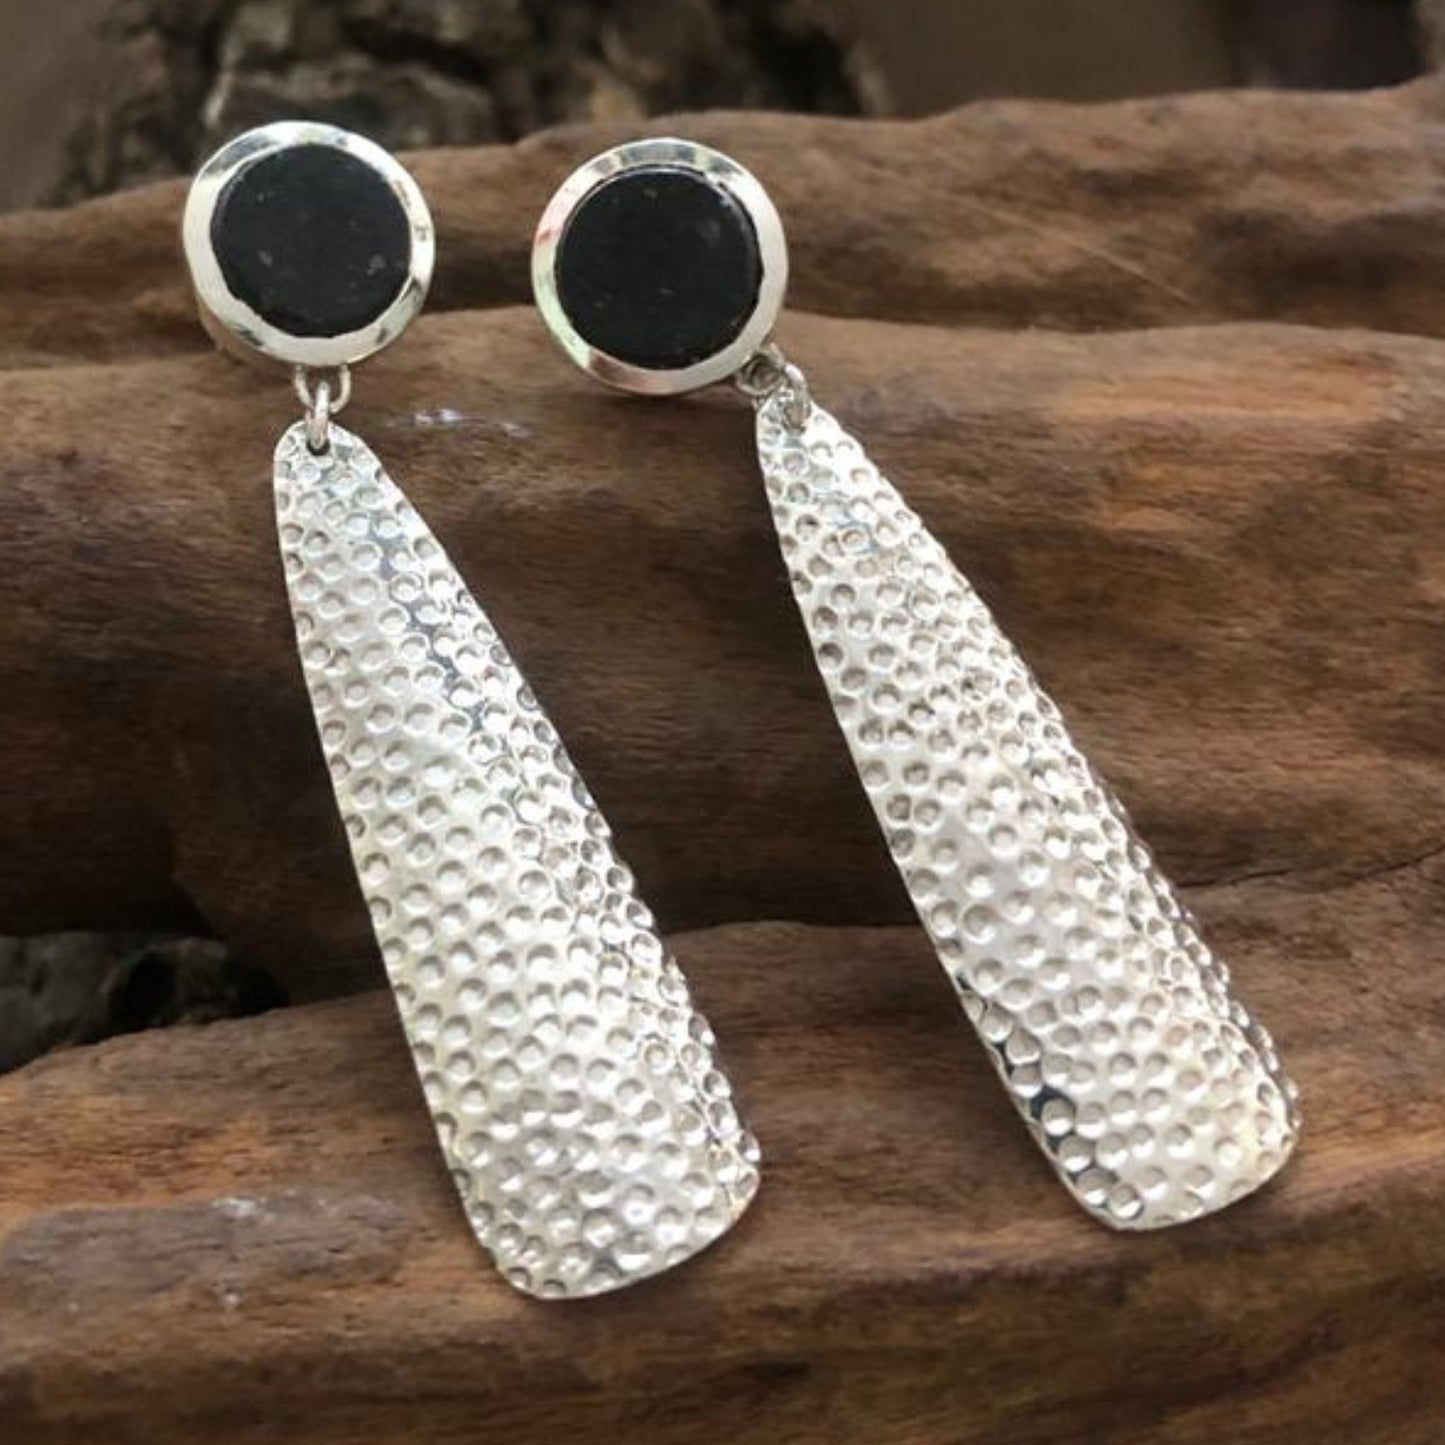 Matobo inspired granite and silver earrings made in Bulawayo 